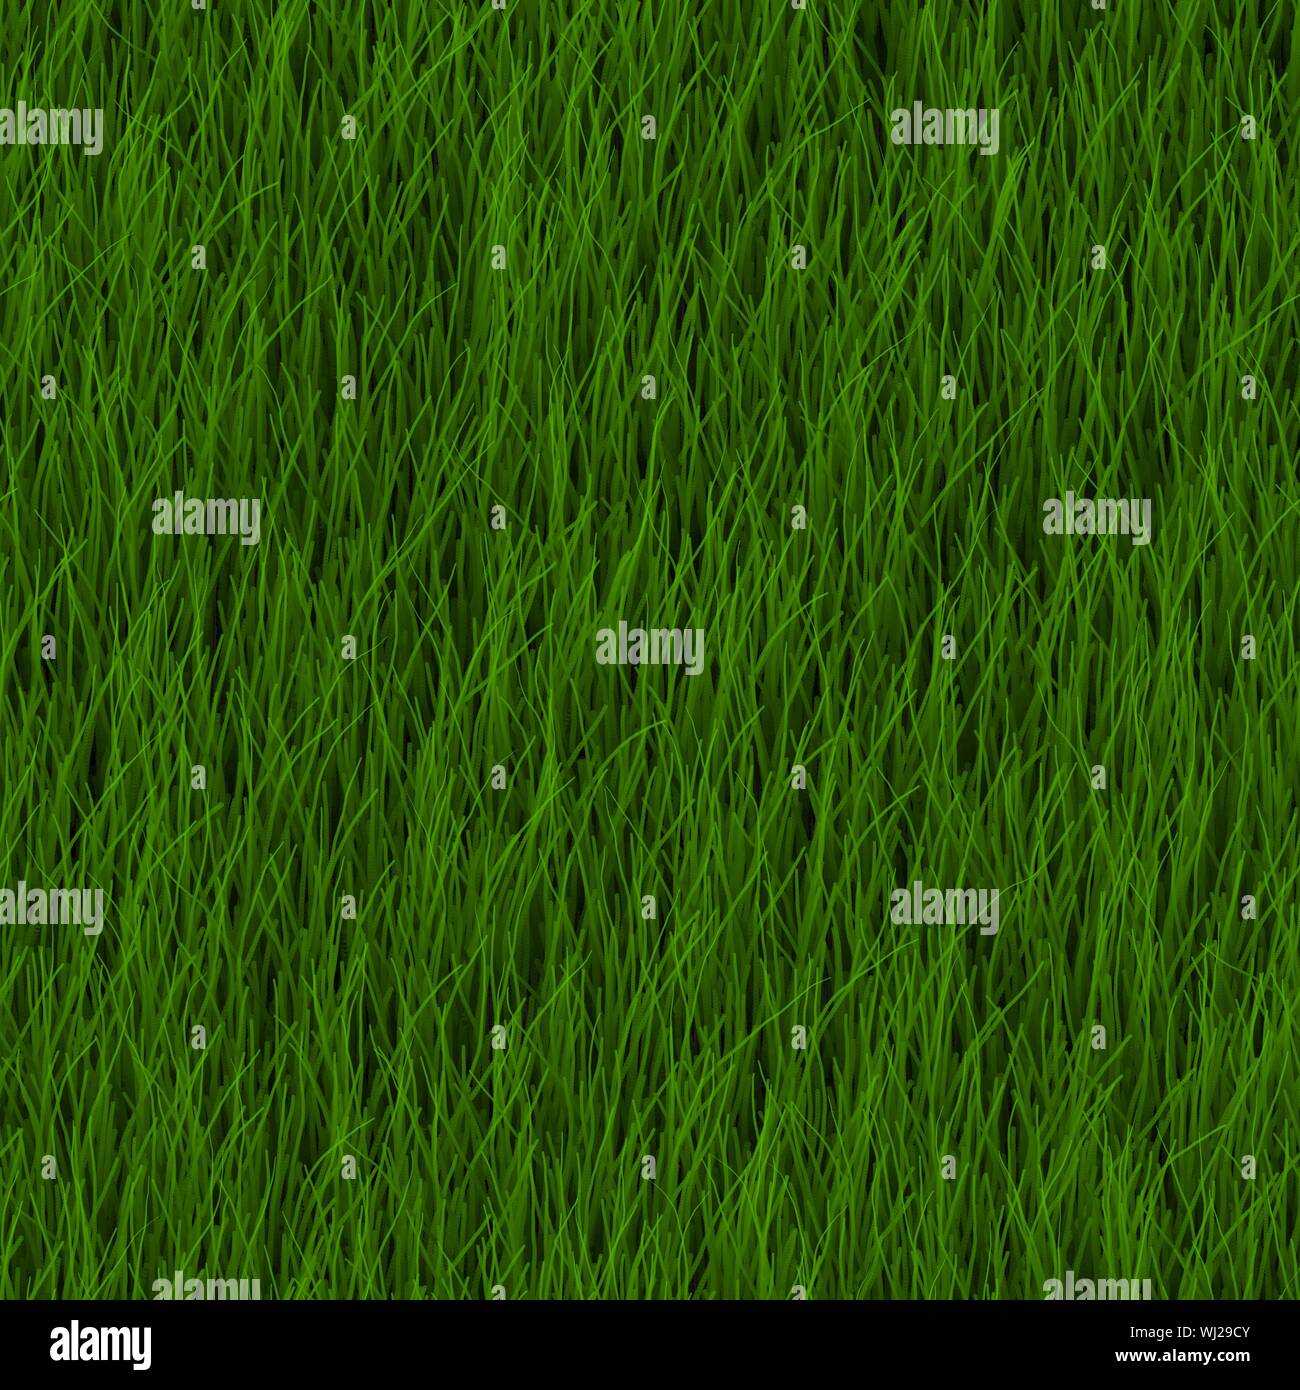 Cartoon Grass Background Illustration as a Art Stock Photo - Alamy